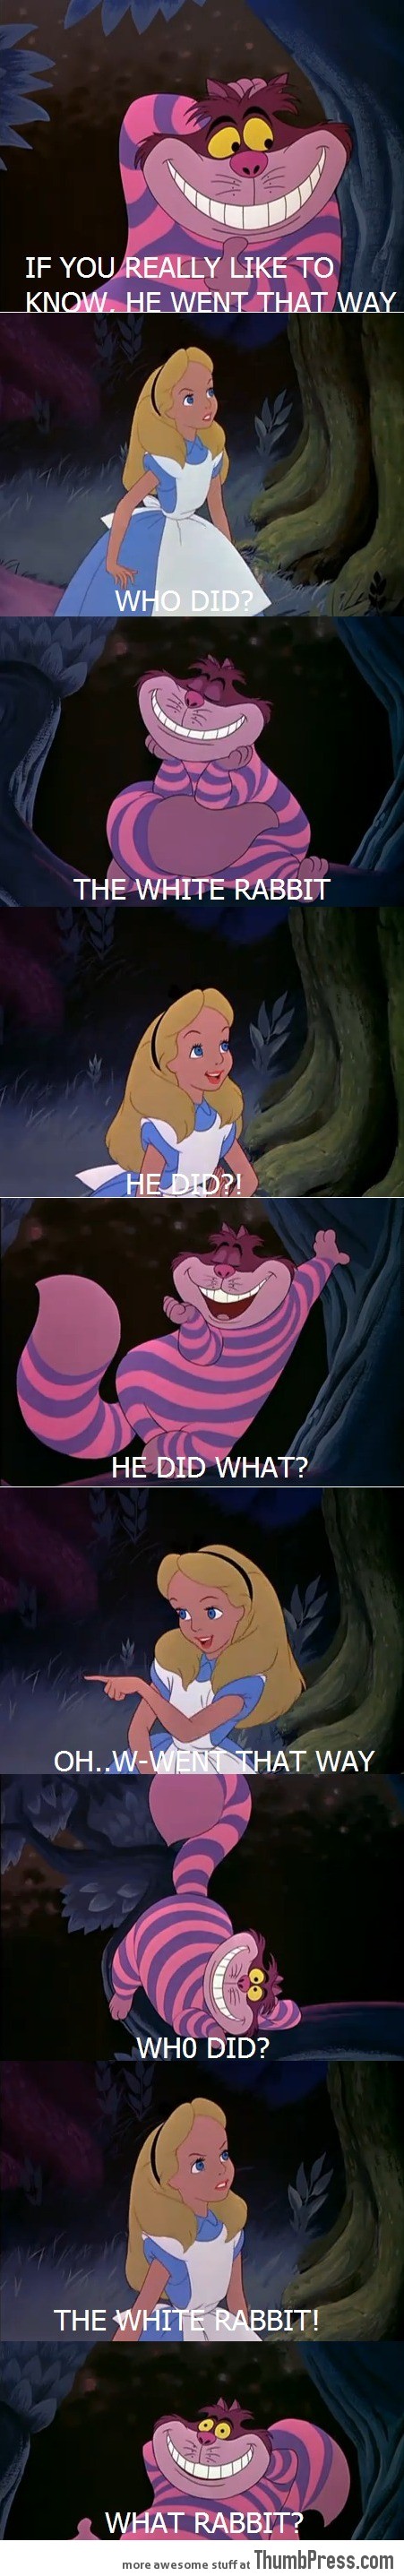 Disney's Original Troll